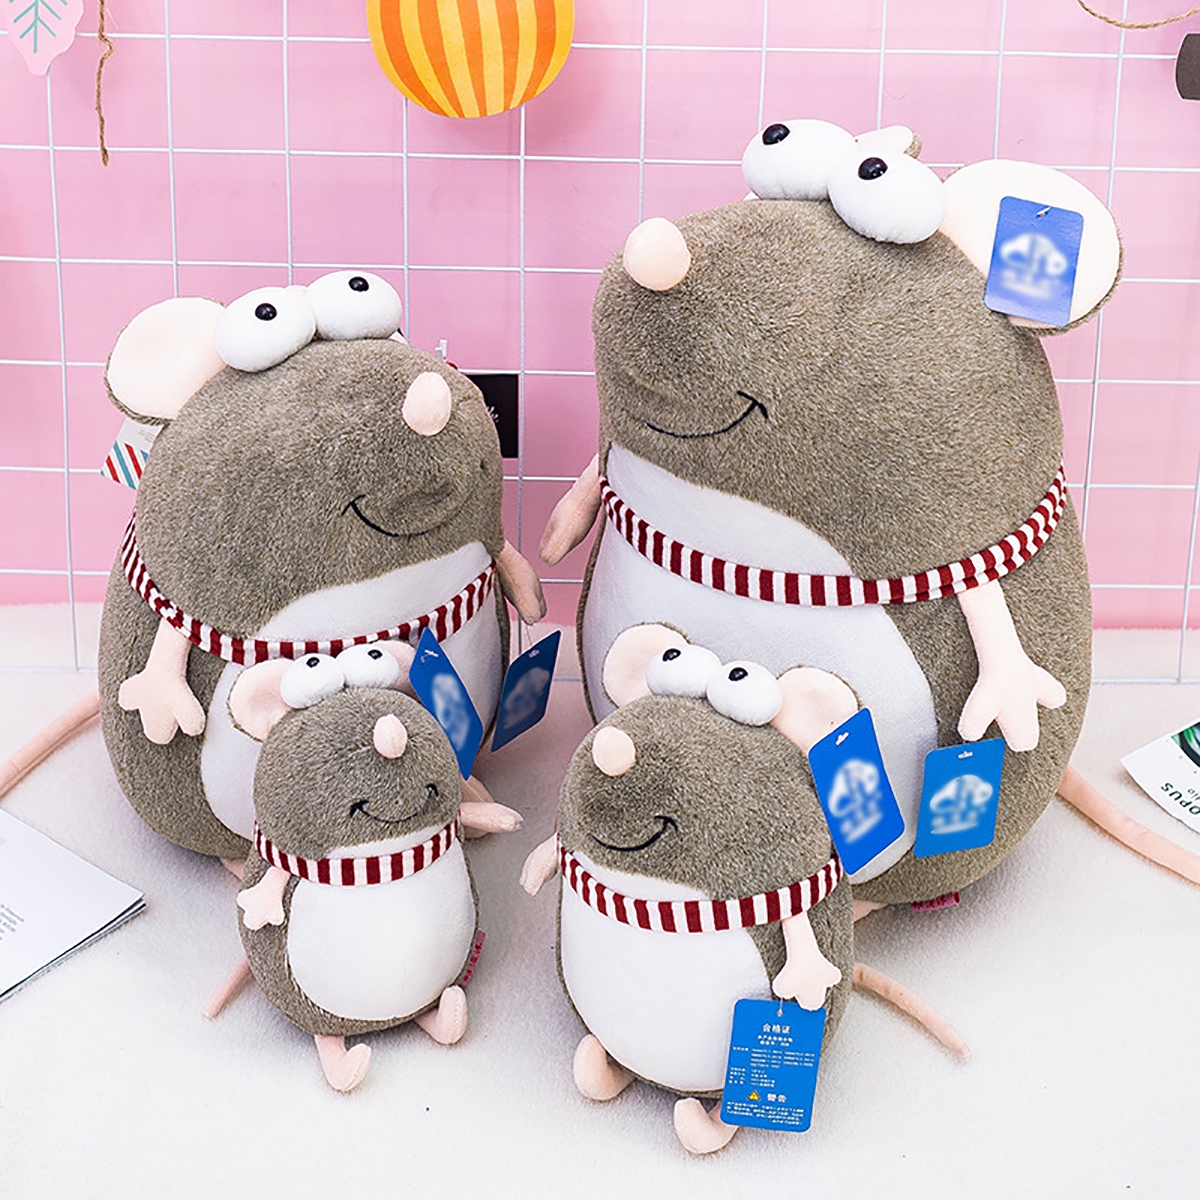 Cute Fat Grey Big Eyes Rat Pillow Stuffed Animal Plush Toy for Kids Birthday Gift